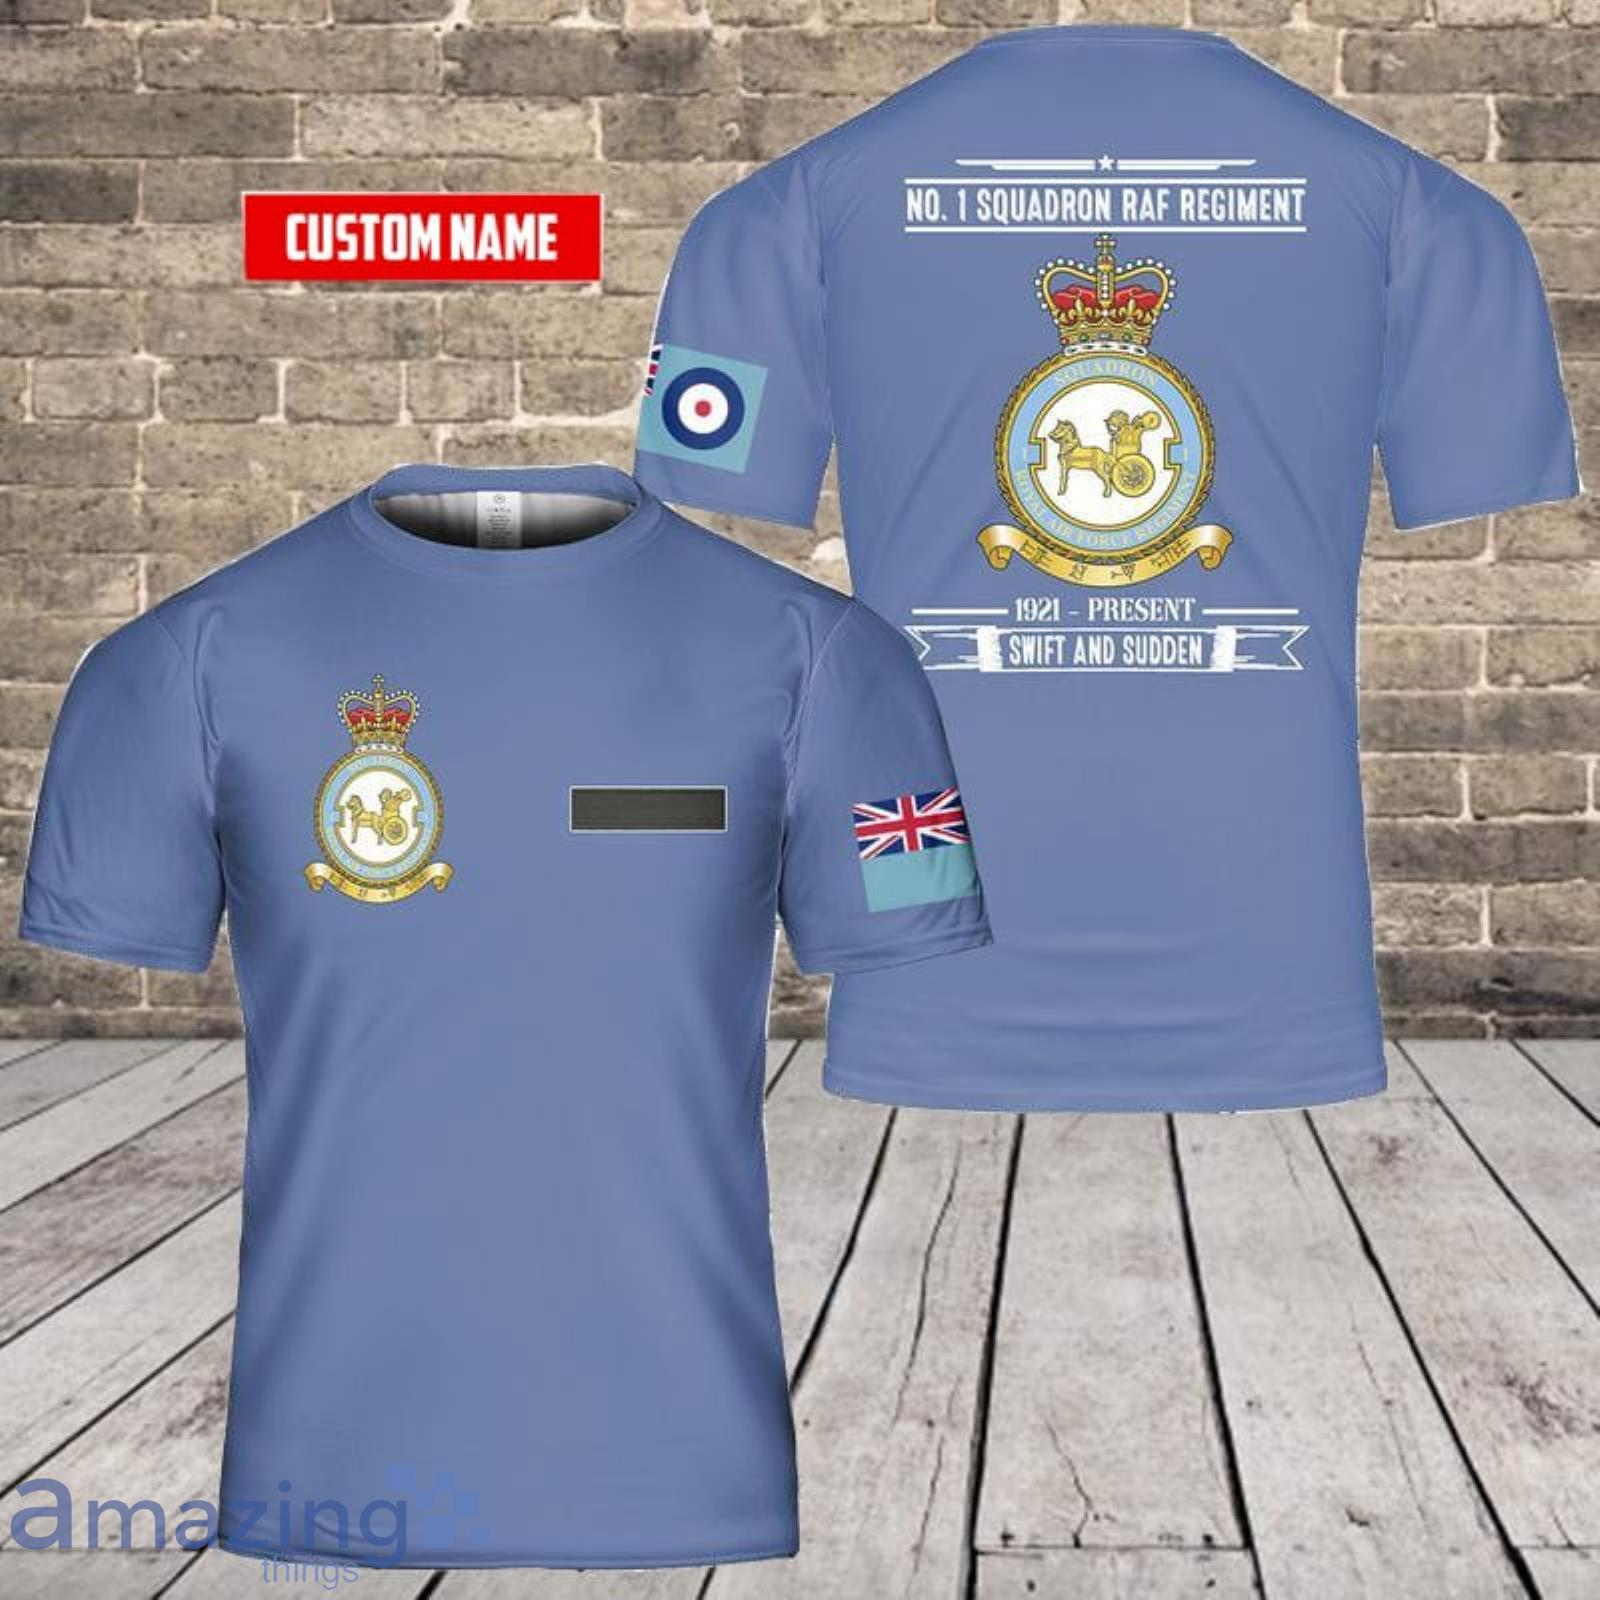 luge Bluebell Samler blade Custom Name Royal Air Force No. 1 Squadron RAF Regiment 3D T-Shirt For Fans